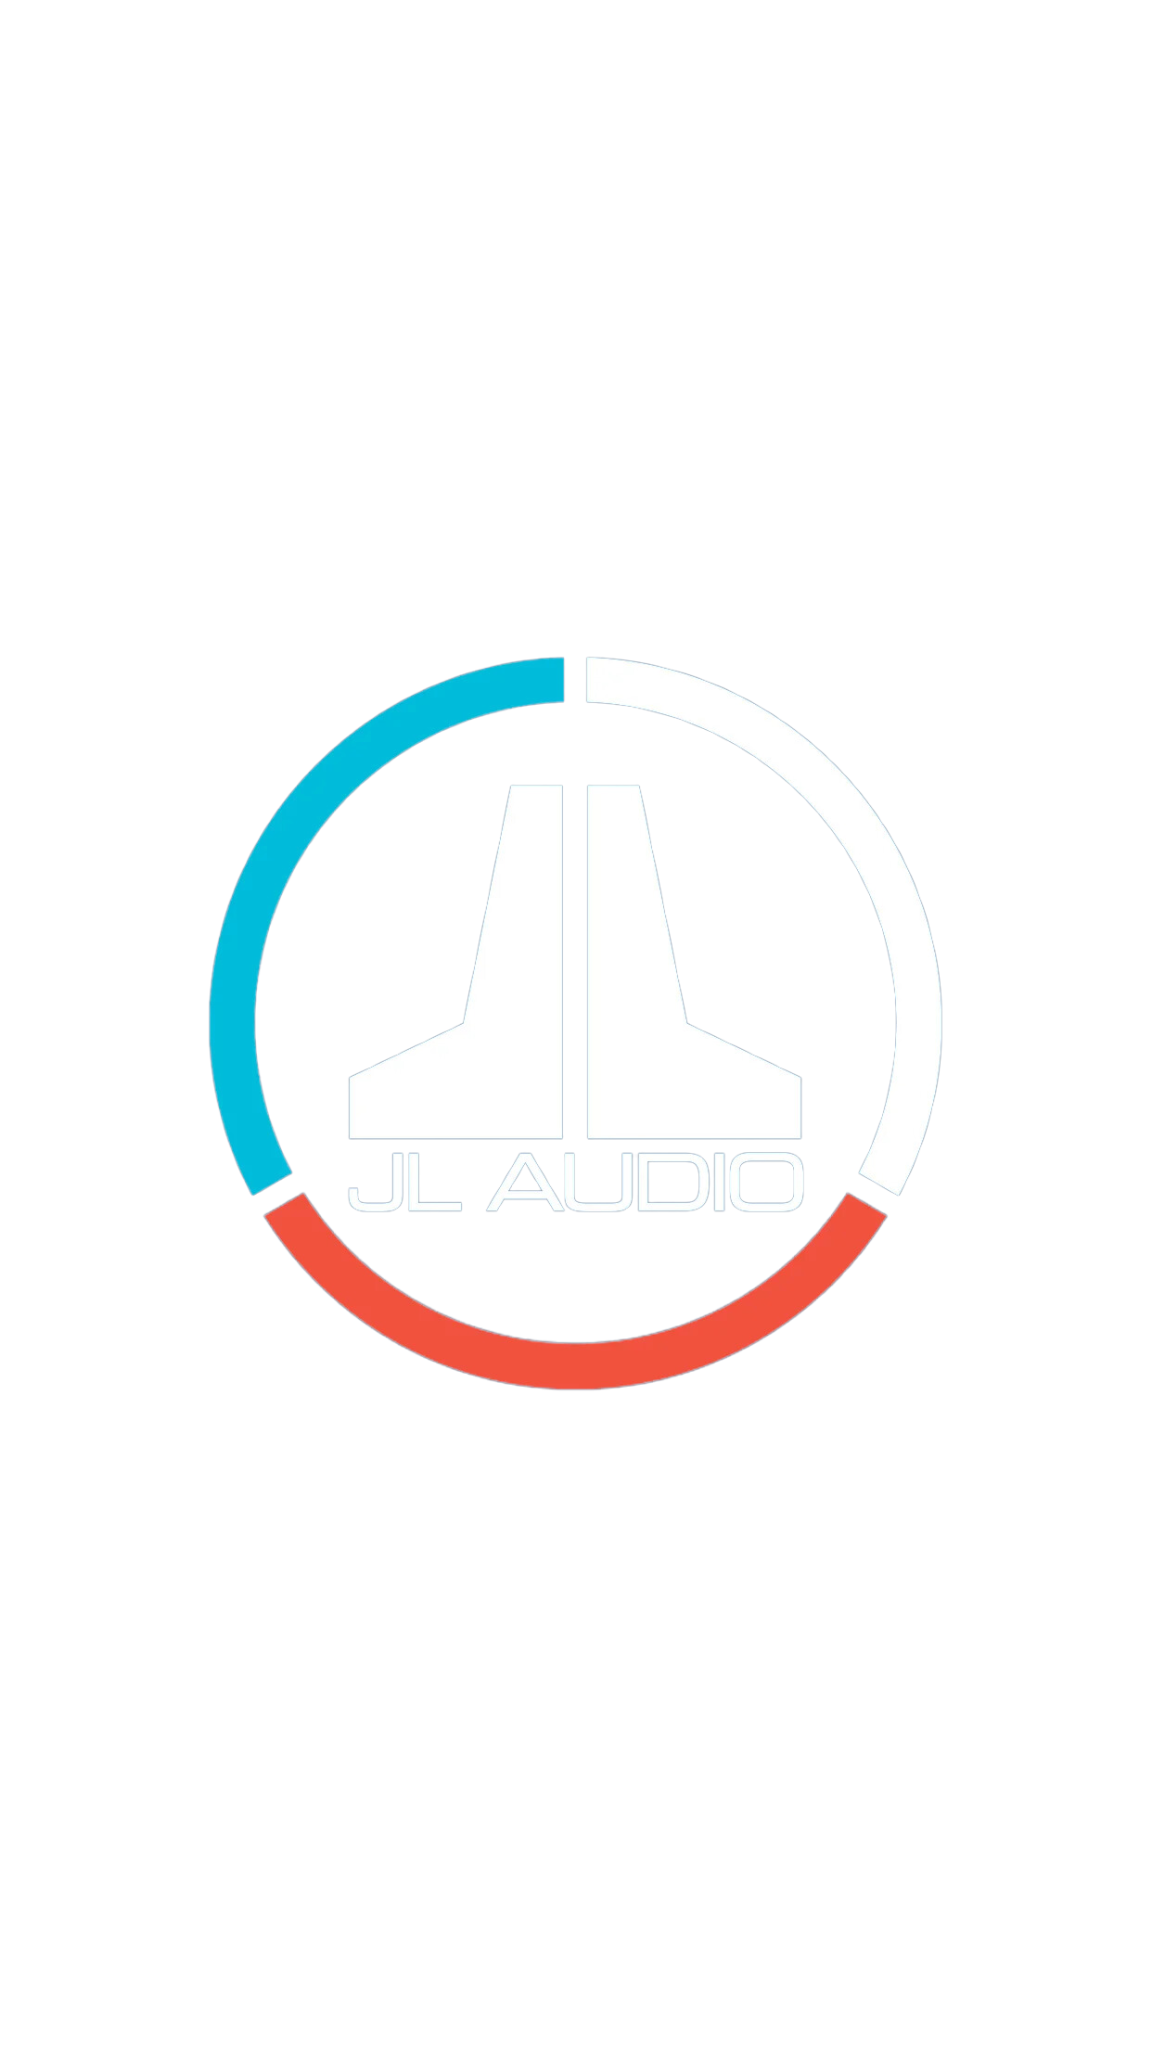 jl audio edit.png